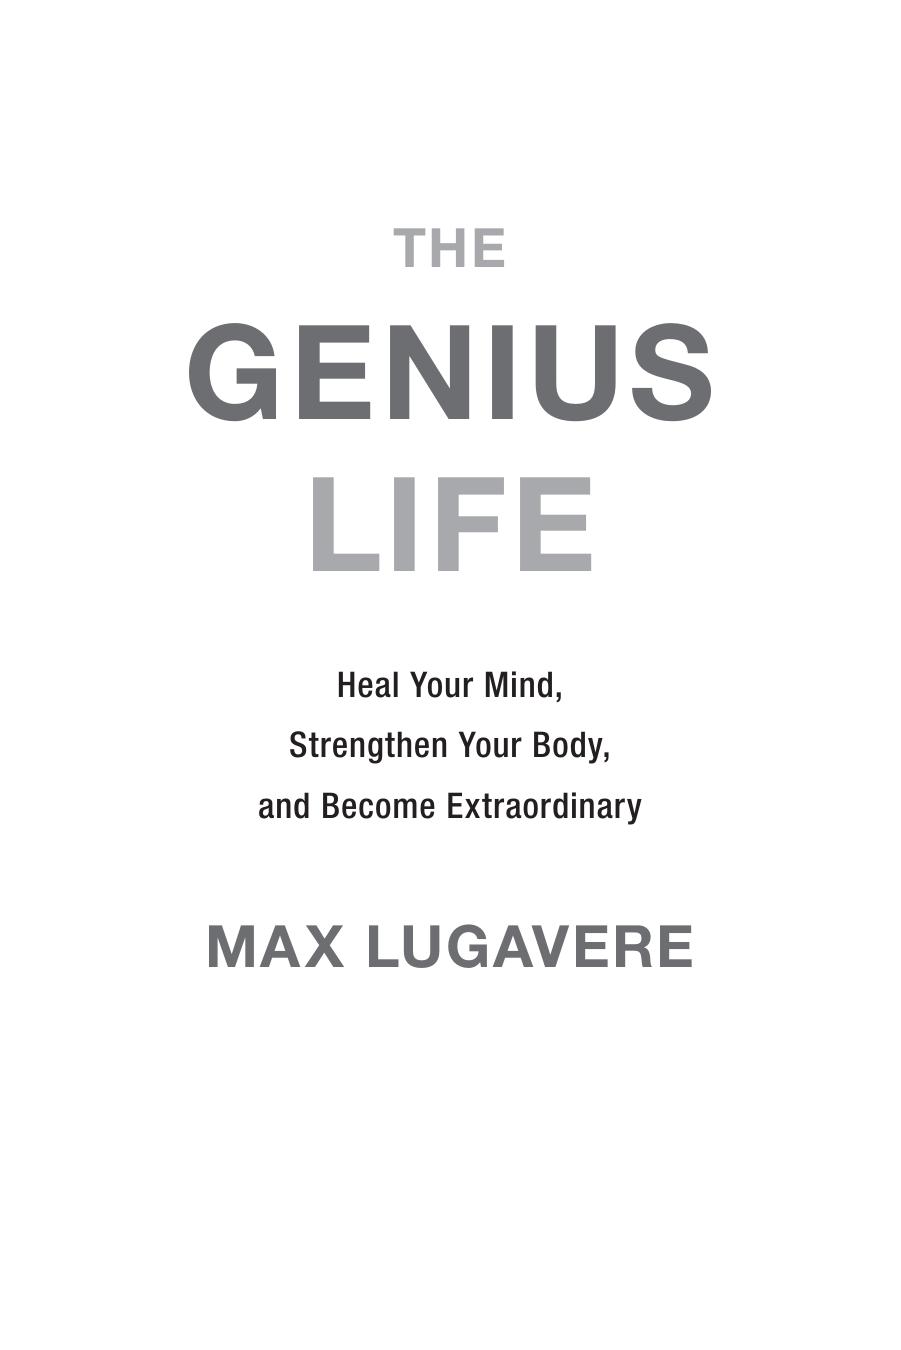 The Genius Life by Max Lugavere